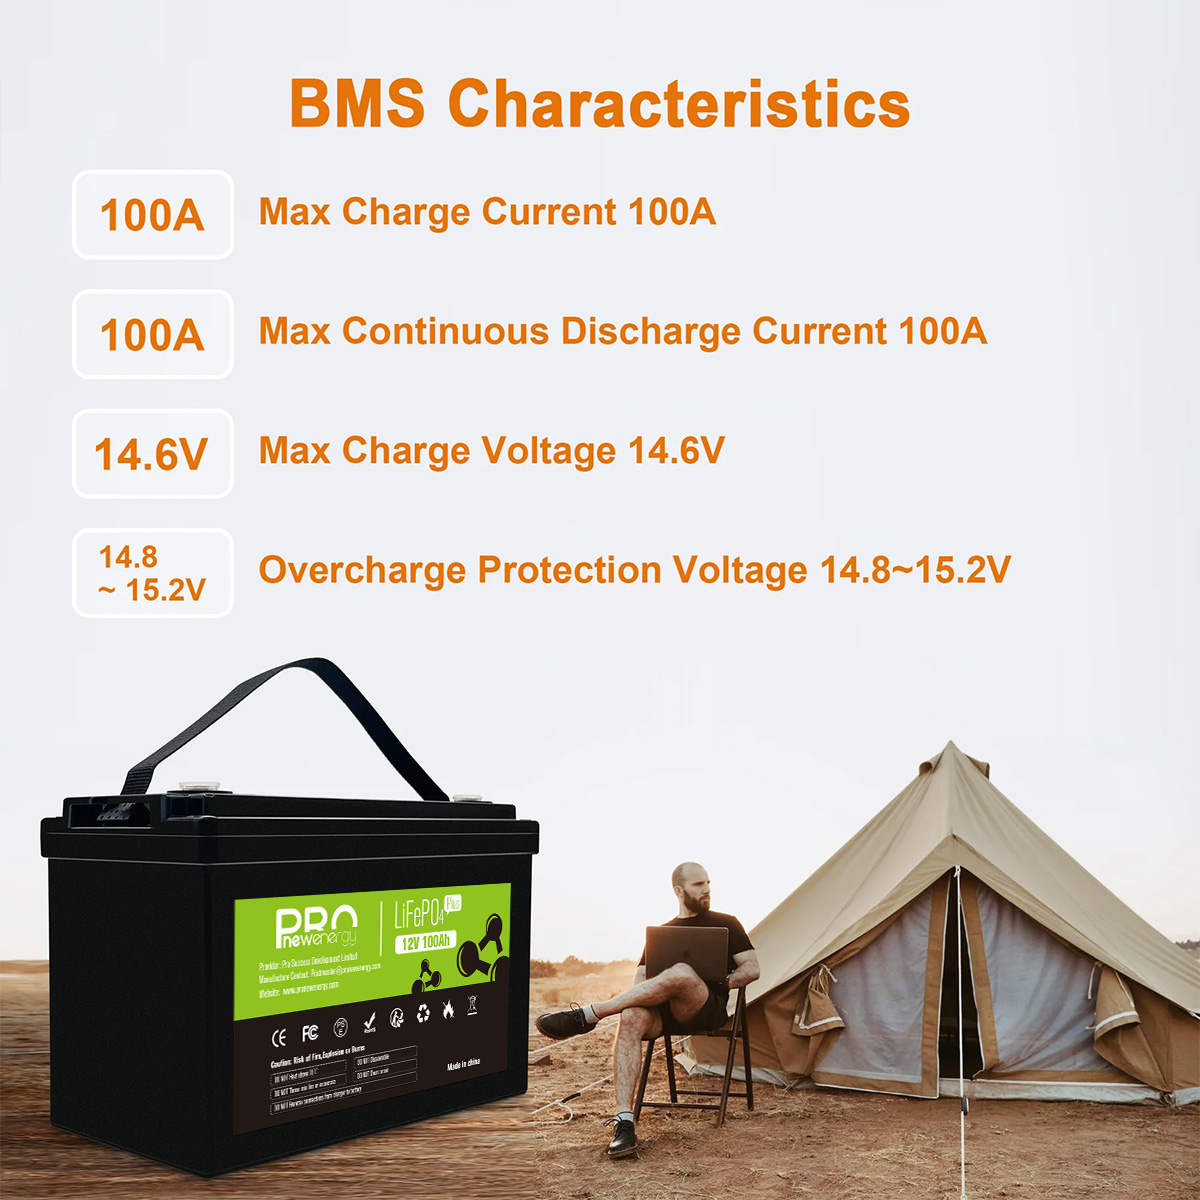 bms battery characteristics